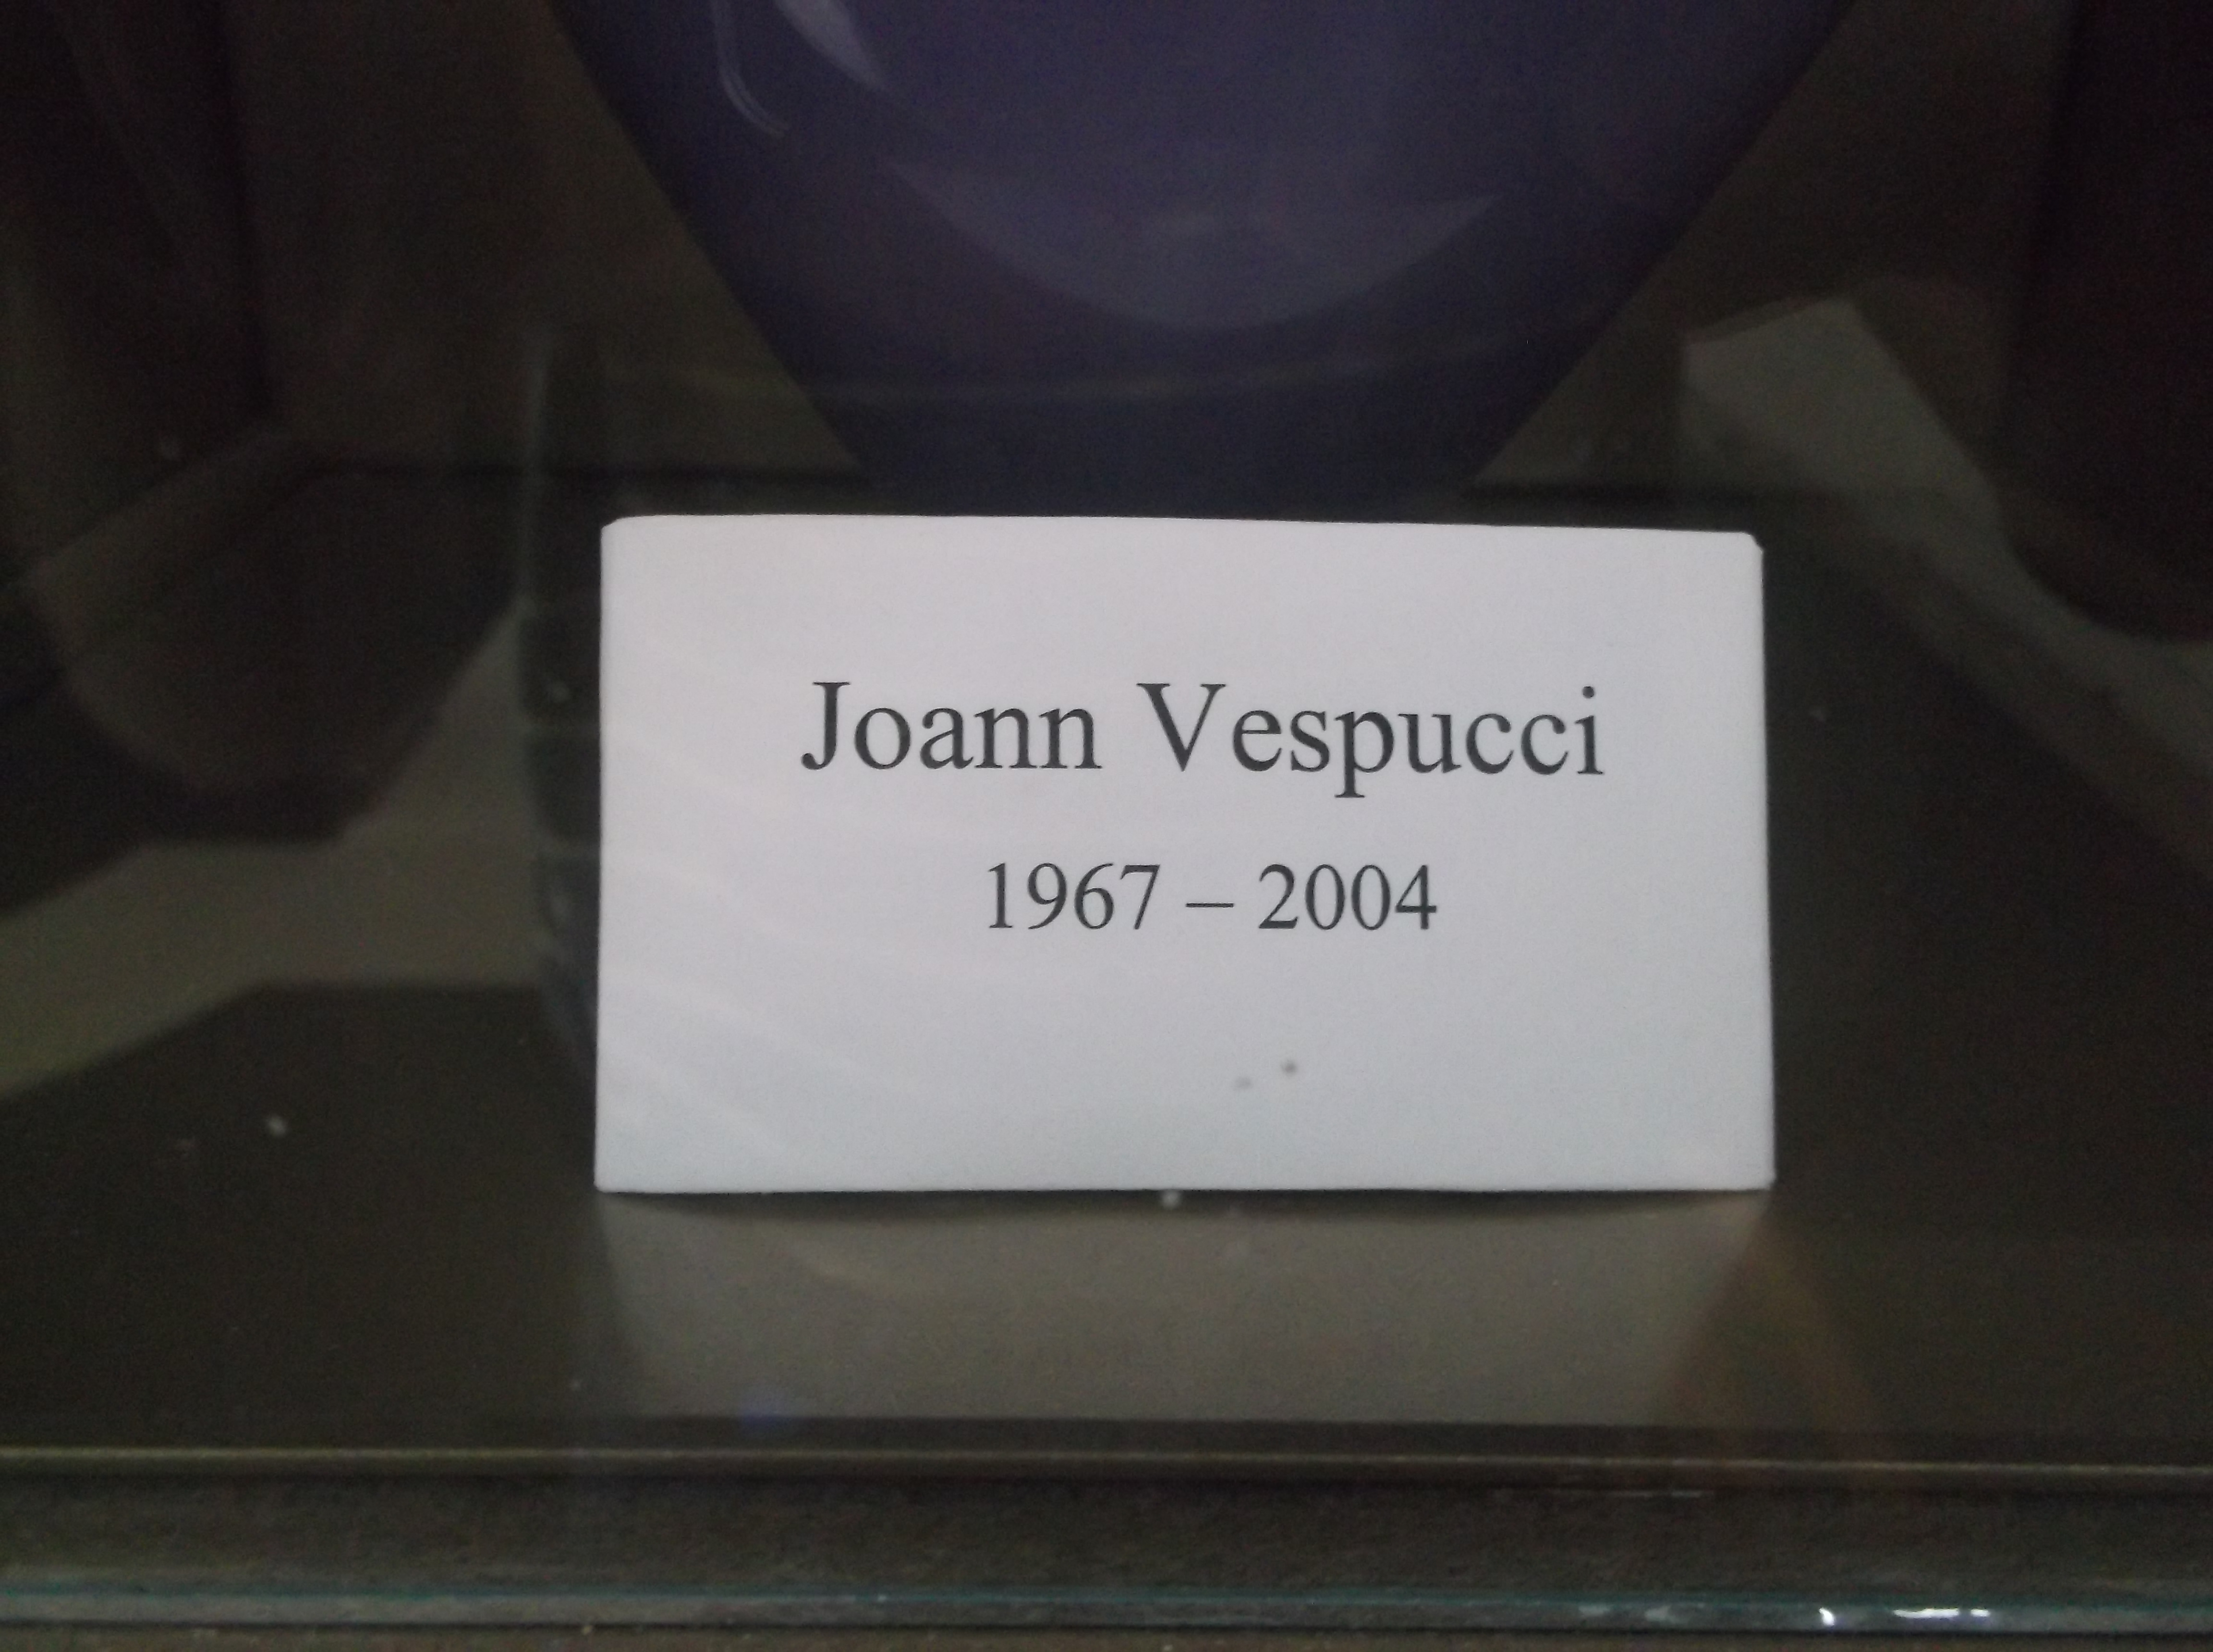 Joann Vespucci